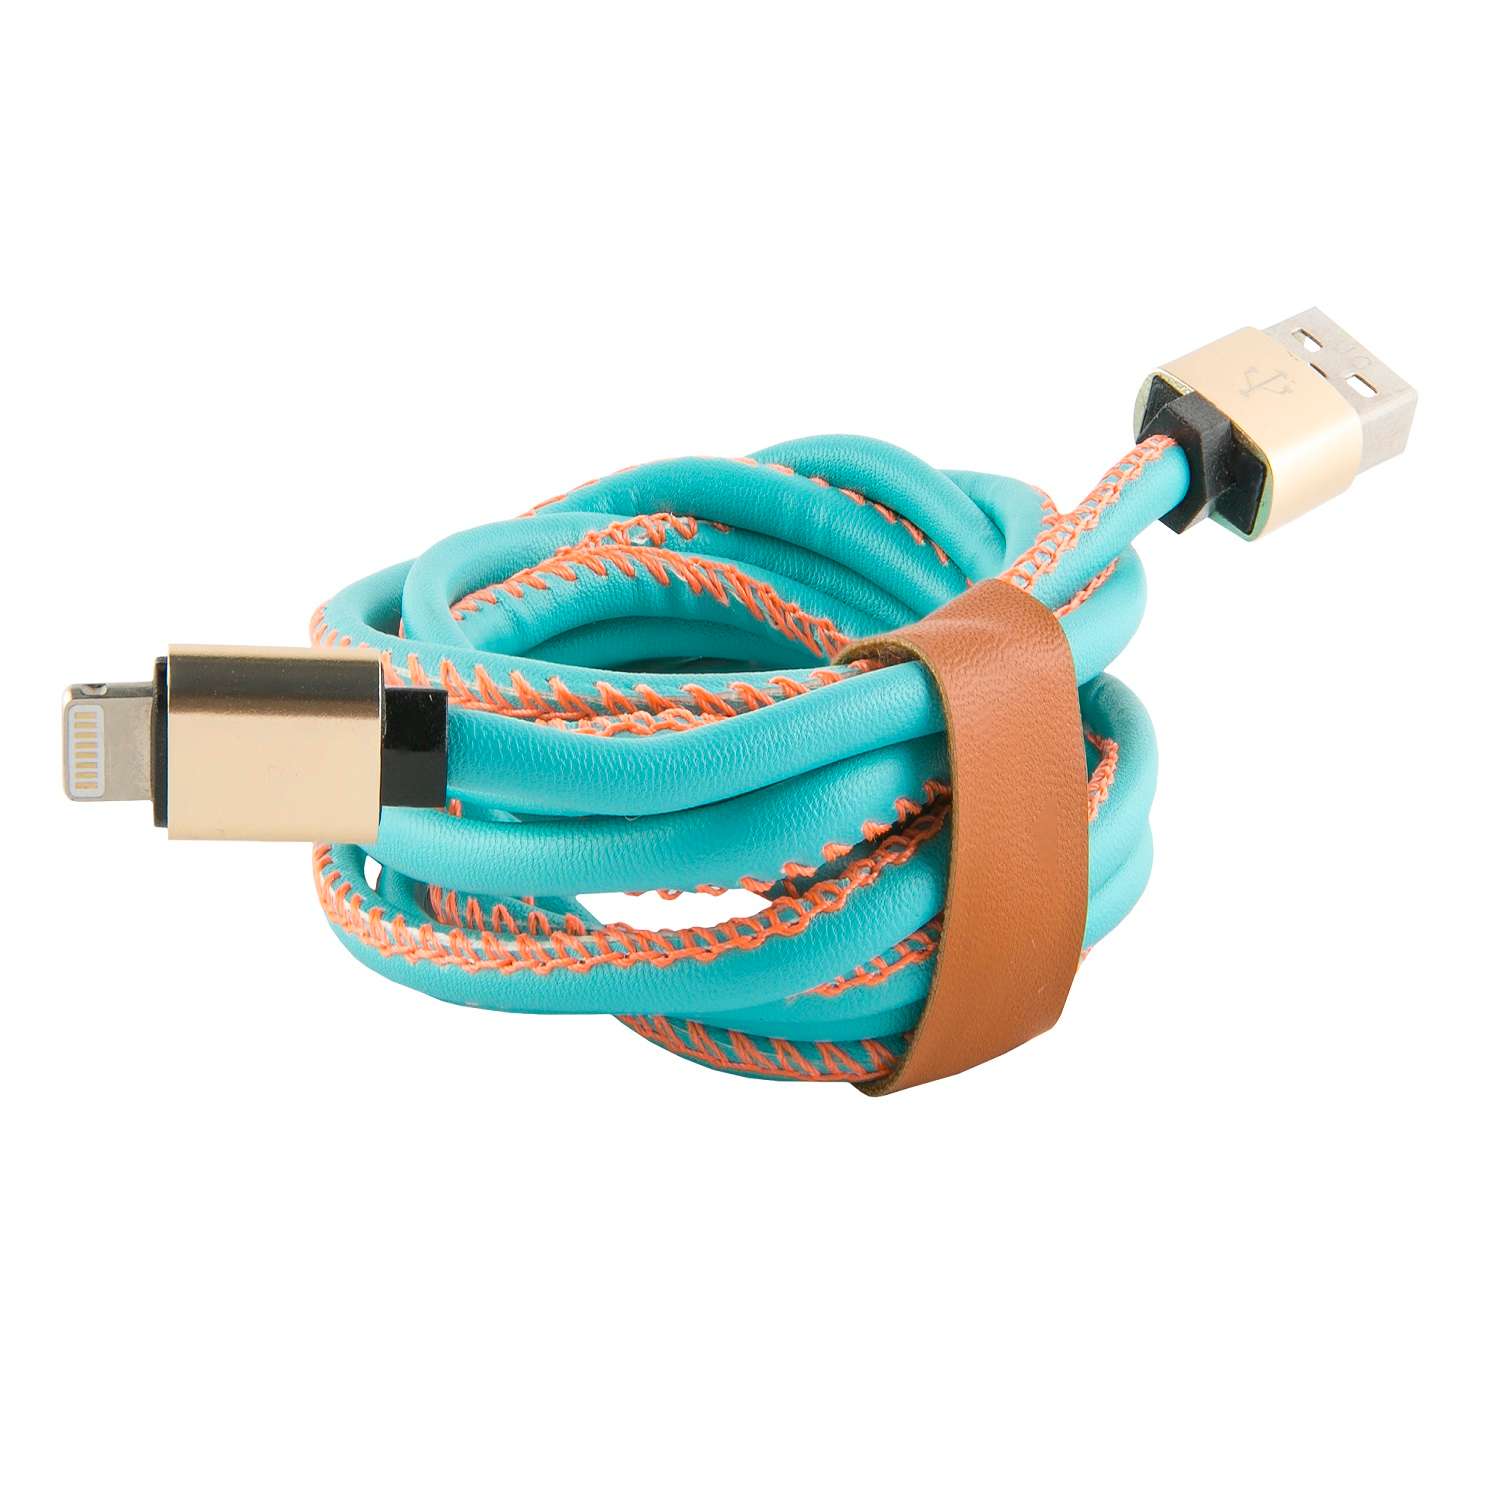 Кабель red line. Дата-кабель Red line USB - Type-c (2 метра) Оплетка "экокожа", коричневый. Red line кабель fishnet синий. Harness 8.2 Red line. Redline кабель Mirco.